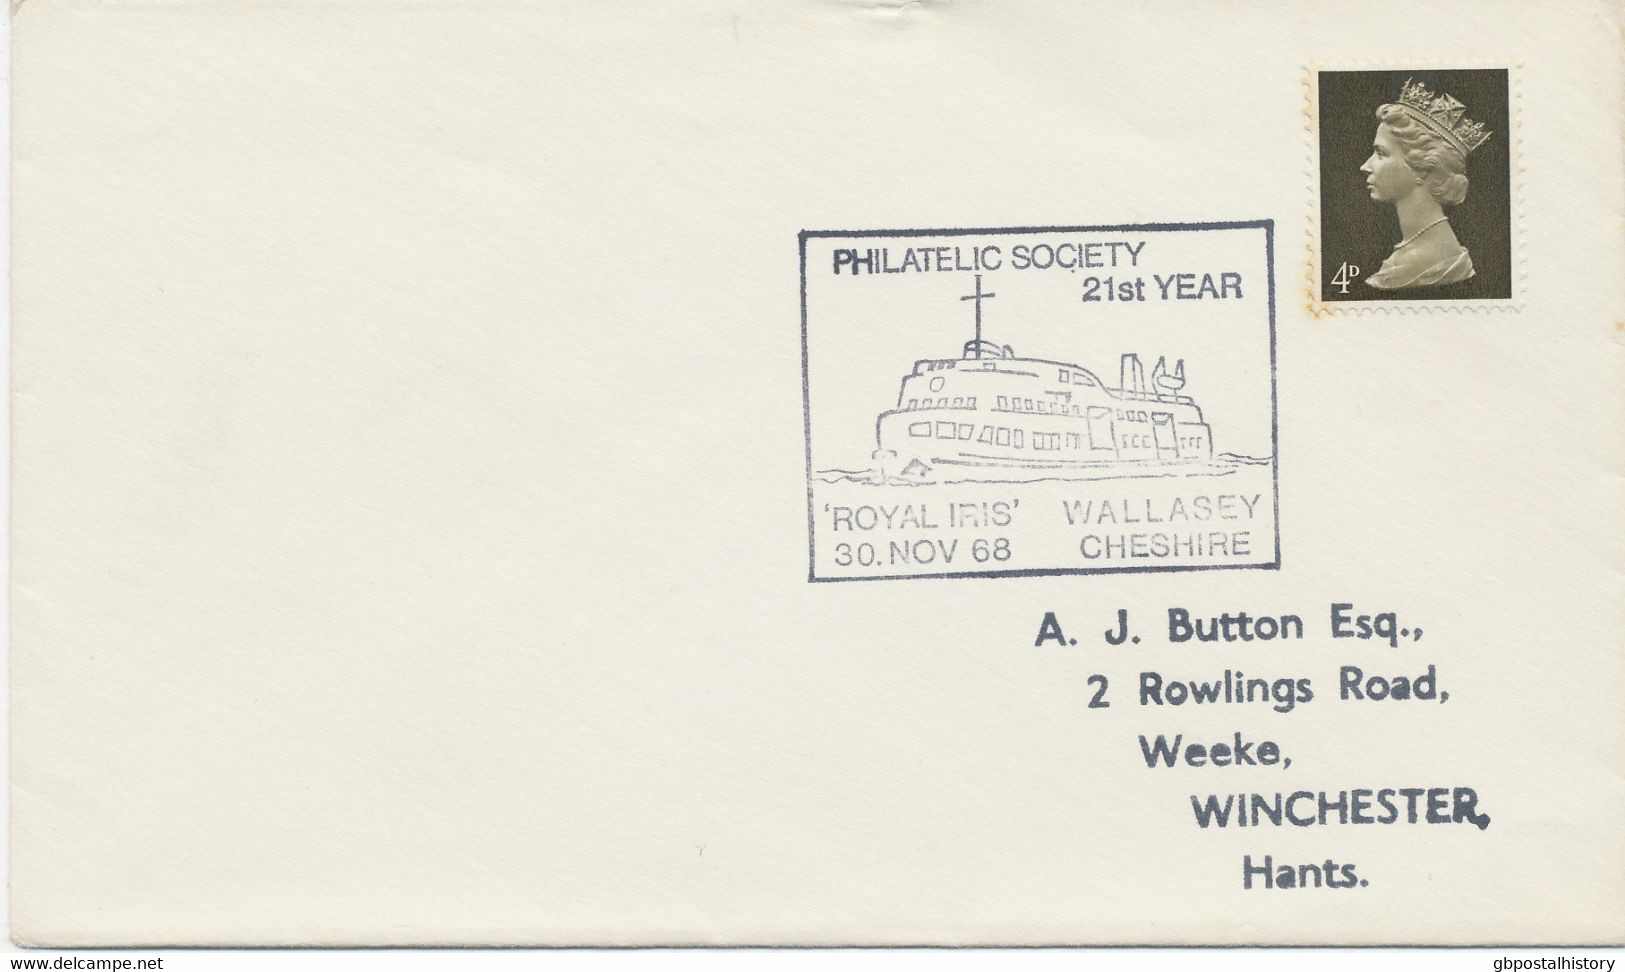 GB SPECIAL EVENT POSTMARKS PHILATELY 1968 Philatelic Society 21st Year 'Royal Iris' Wallasey Cheshire - Briefe U. Dokumente